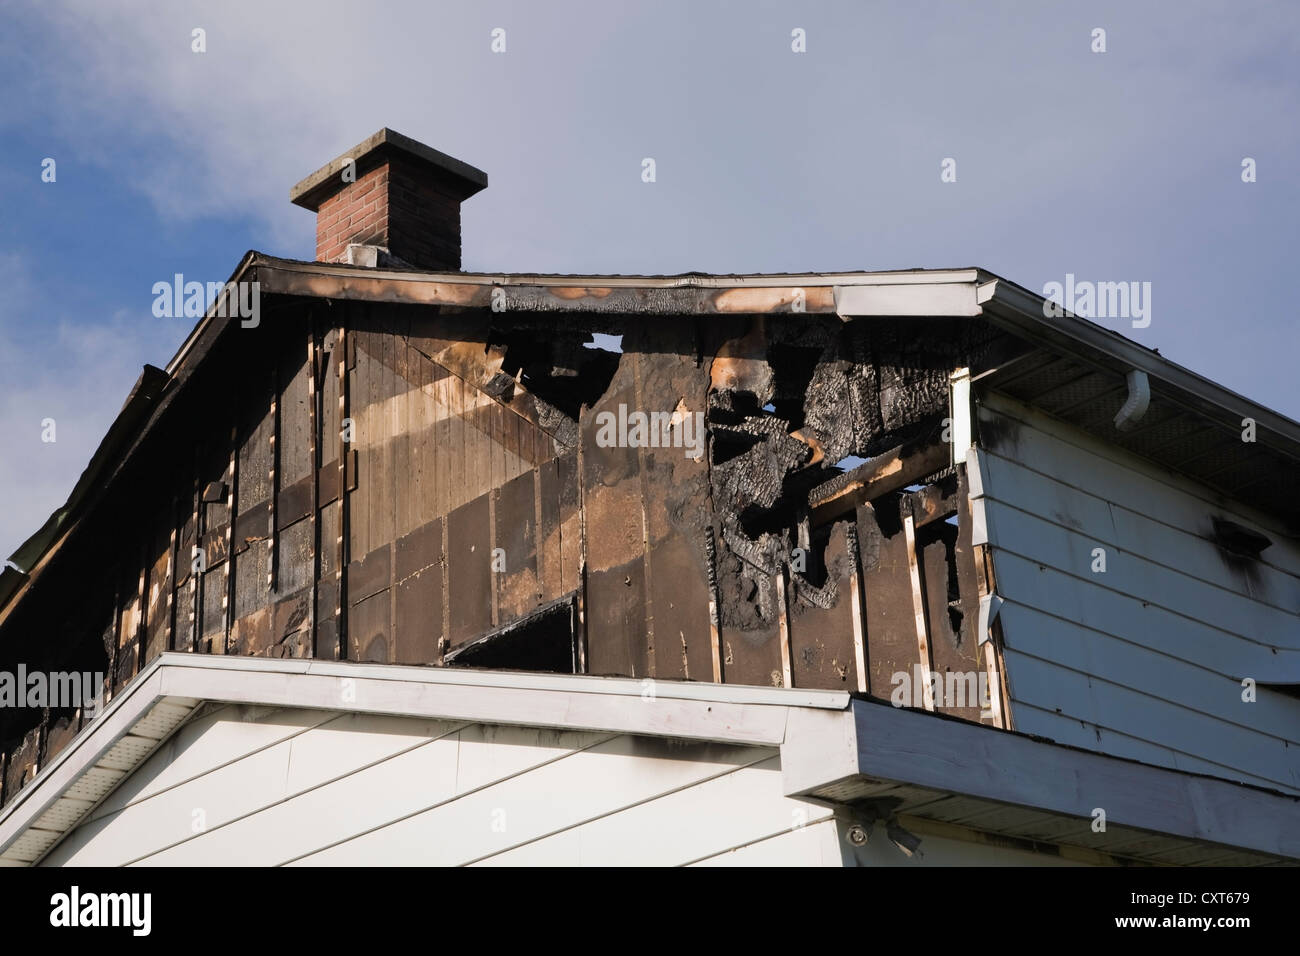 Accueil résidentiels endommagés par le feu, Québec, Canada Banque D'Images